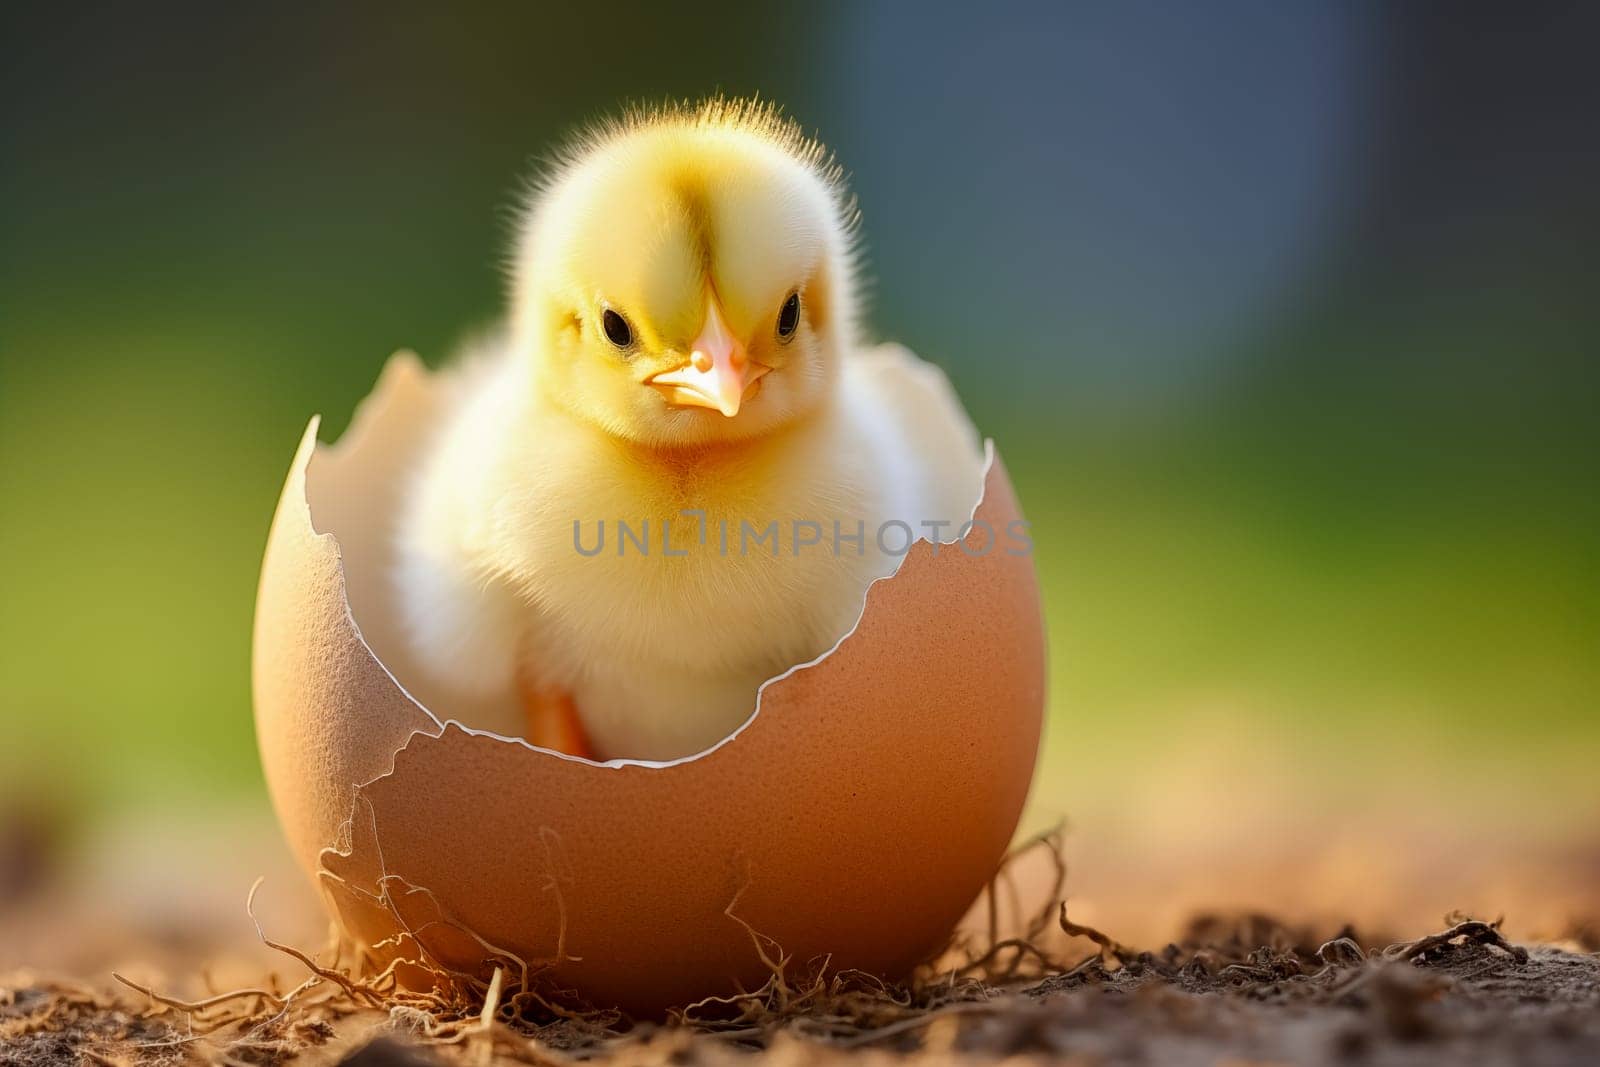 Newborn Chick Emerging from Eggshell by dimol